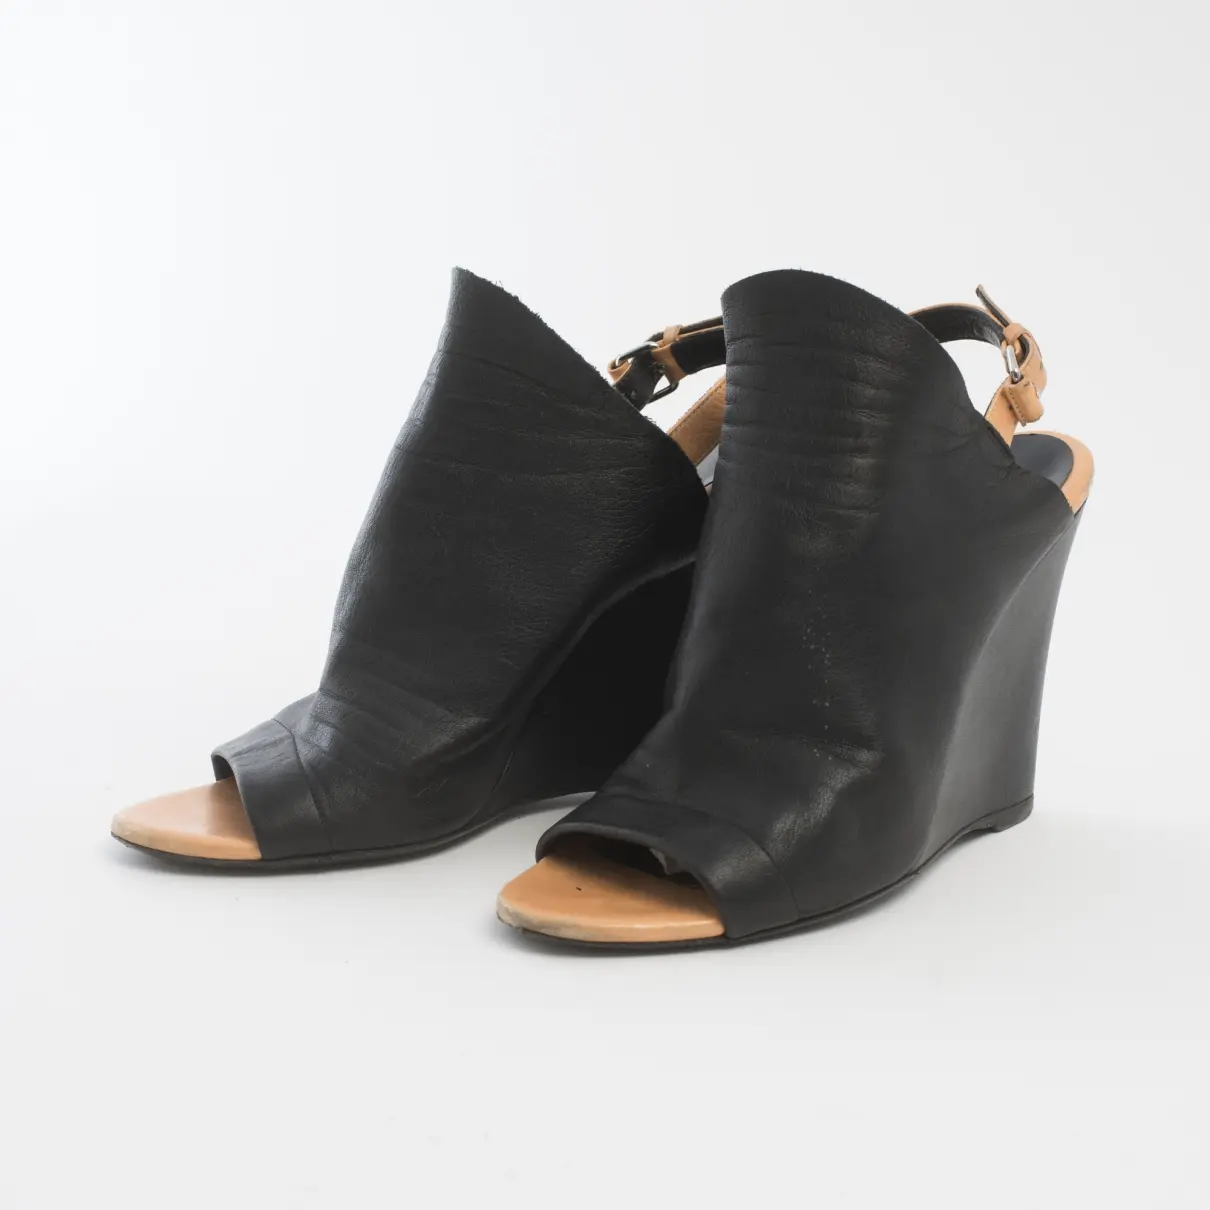 Balenciaga Leather heels for sale